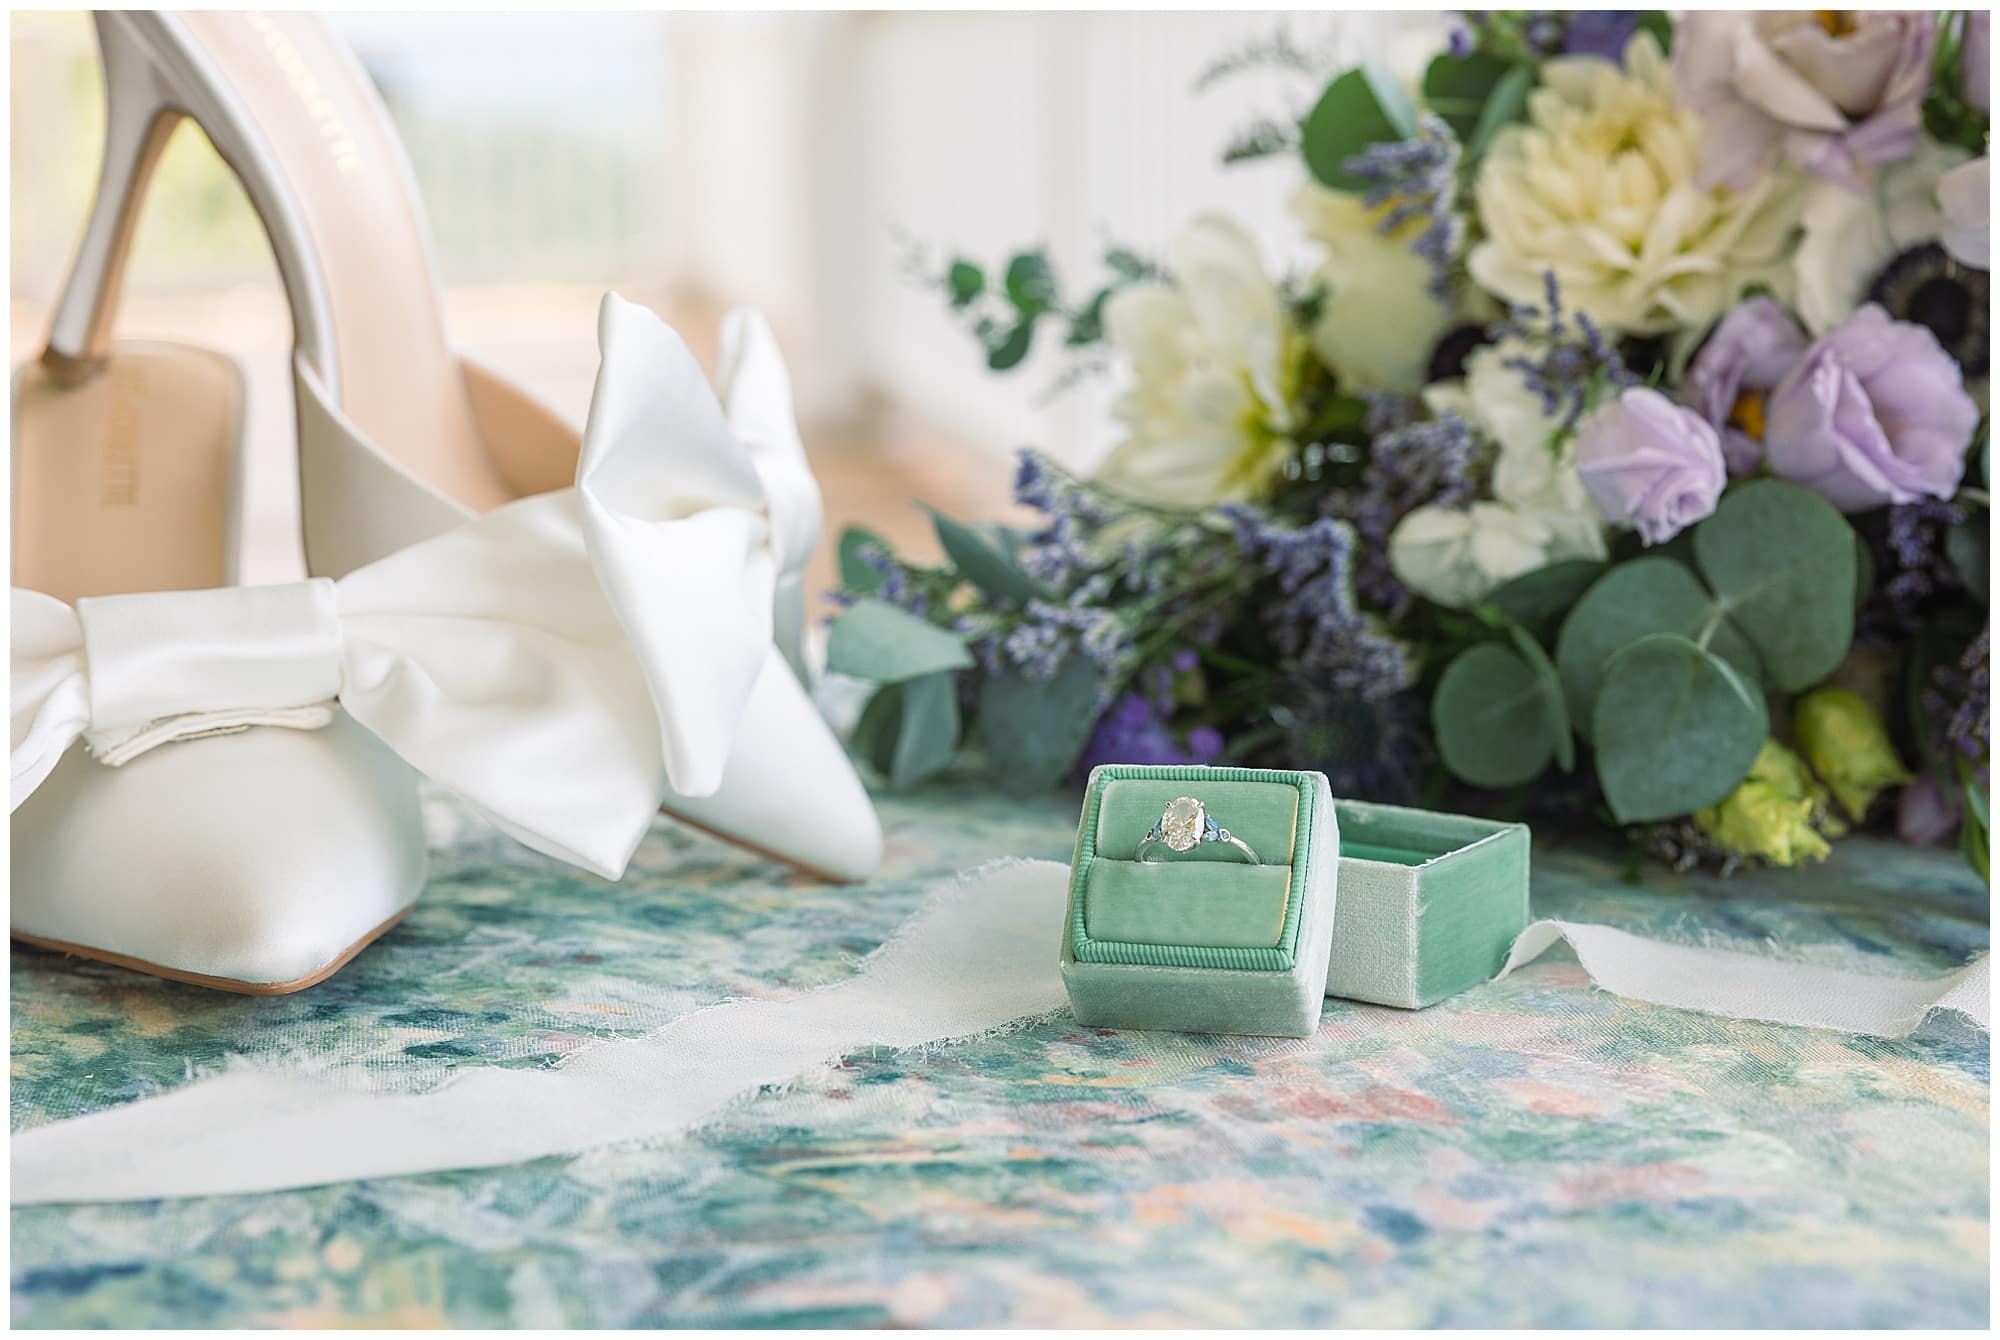 Wedding-Details-on-Monet-Inspired-Backdrop